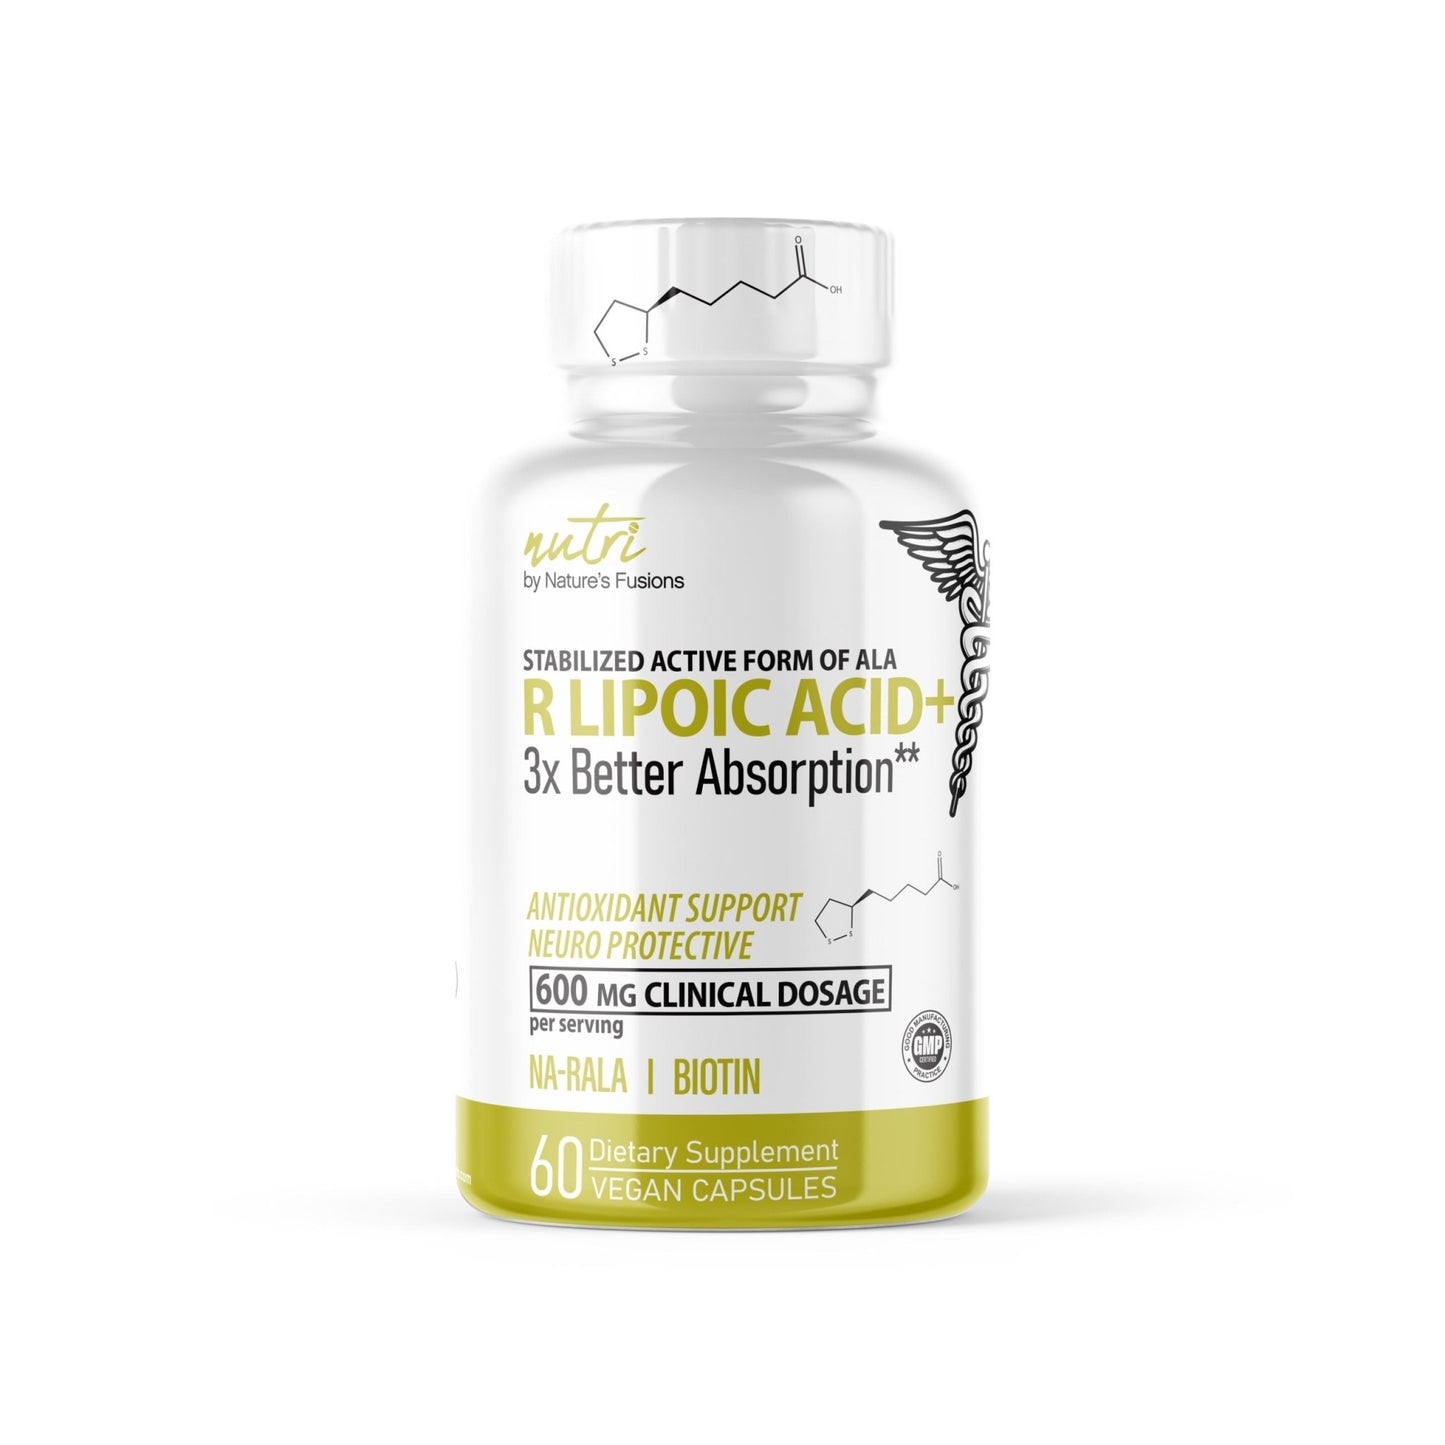 Nutri R Alpha Lipoic Acid 600mg Capsules with Biotin - Stabilized Active Form of ALA - 60 Vegan Capsules - Tree Spirit Wellness